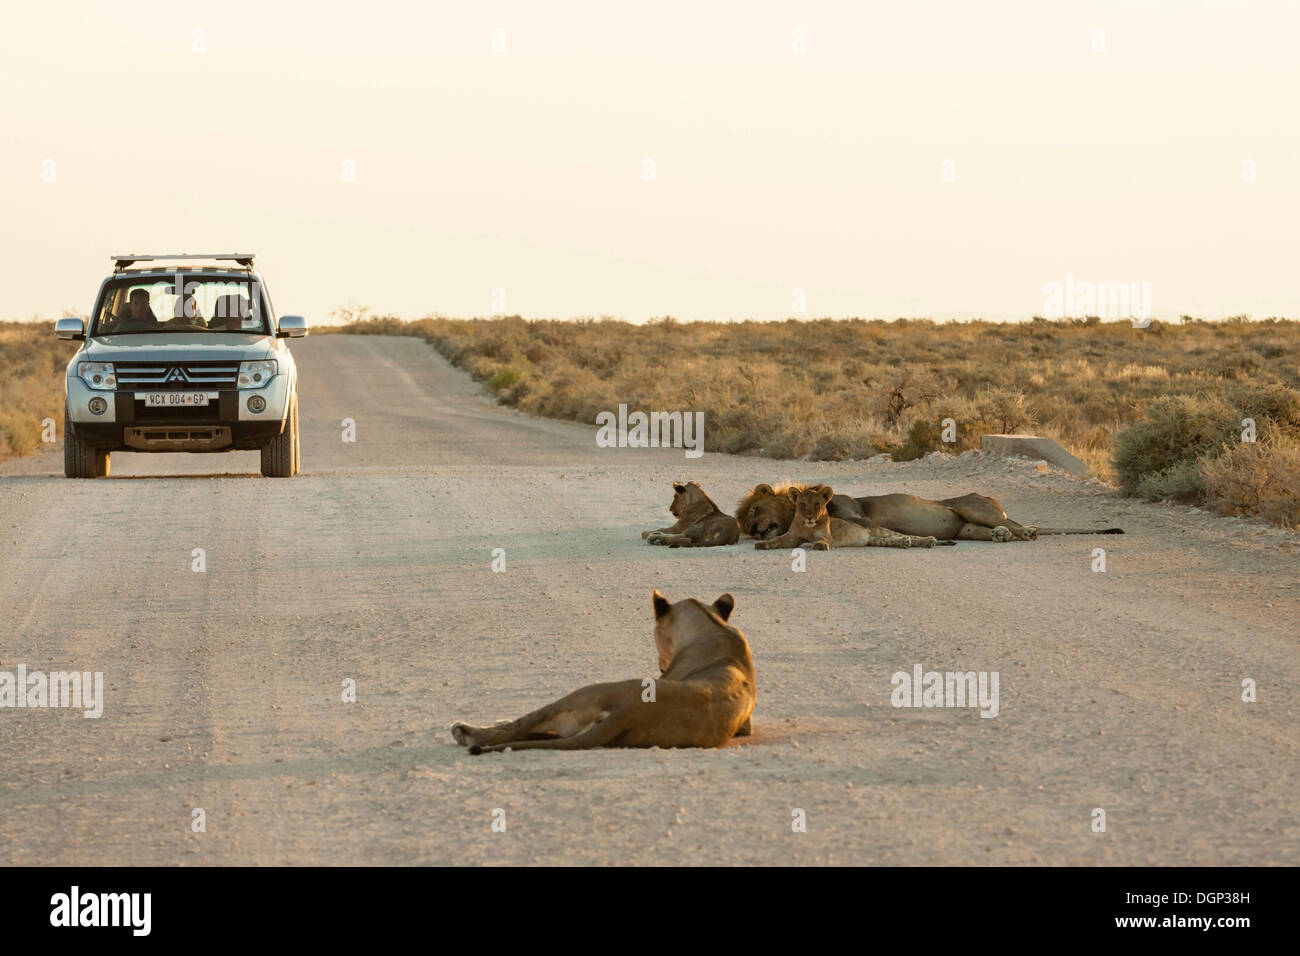 Lion (Panthera leo), pride of lions lying on road, SUV in the back, Etosha National Park, Namibia Stock Photo